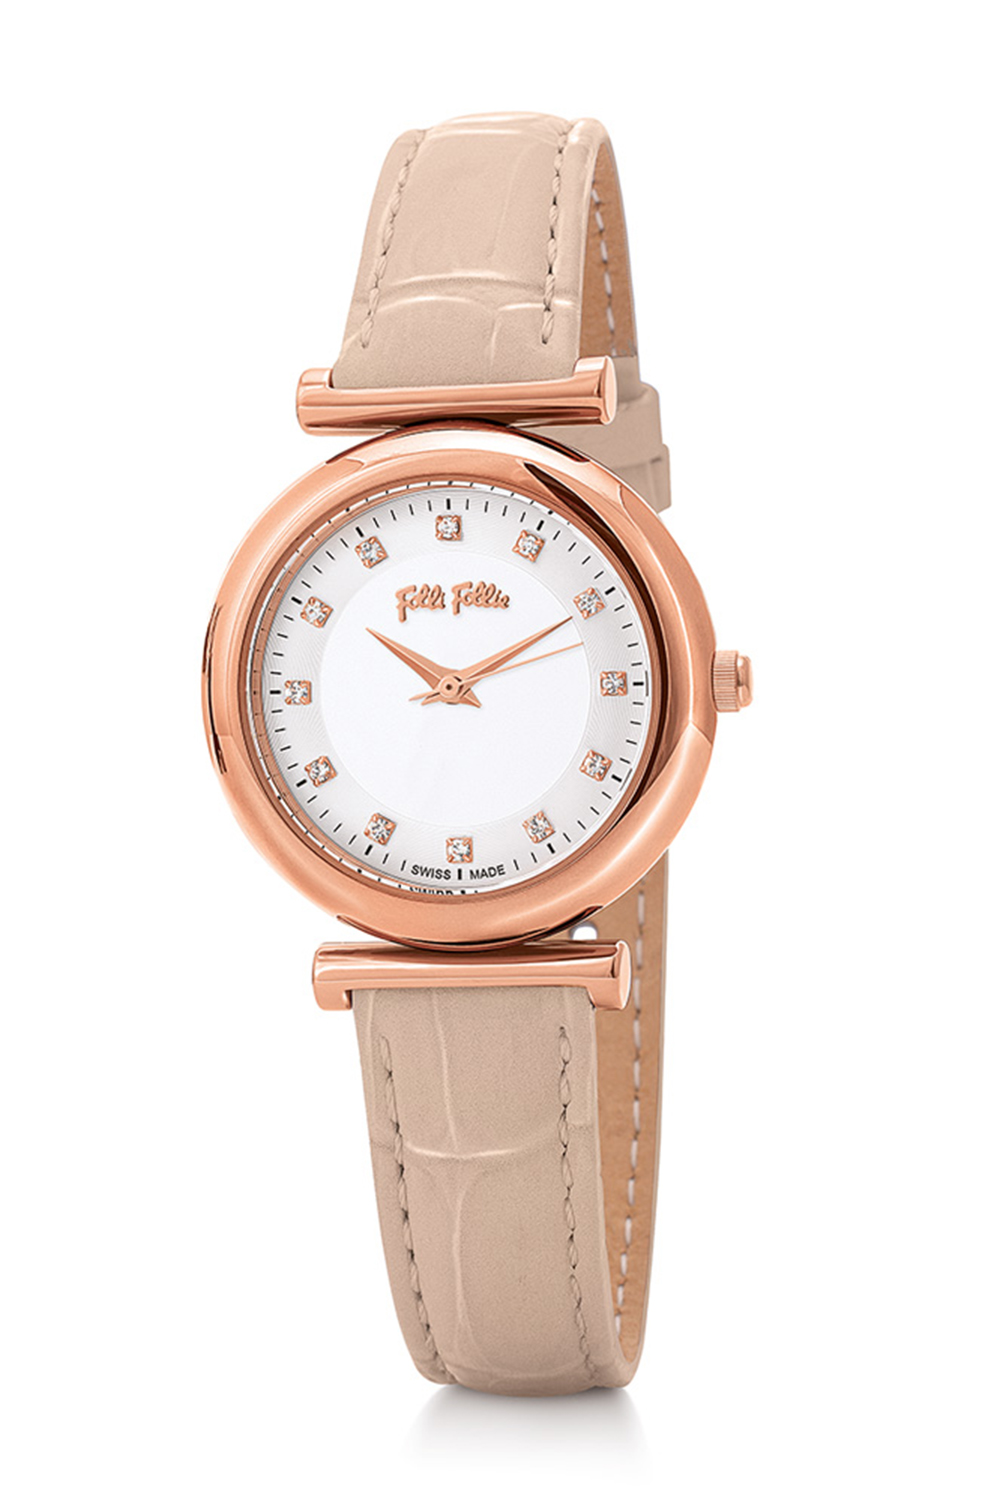 FOLLI FOLLIE – Γυναικείο ρολόι με δερμάτινο λουράκι FOLLI FOLLIE SPARKLE CHIC ροζ WF16R022SSS-PI